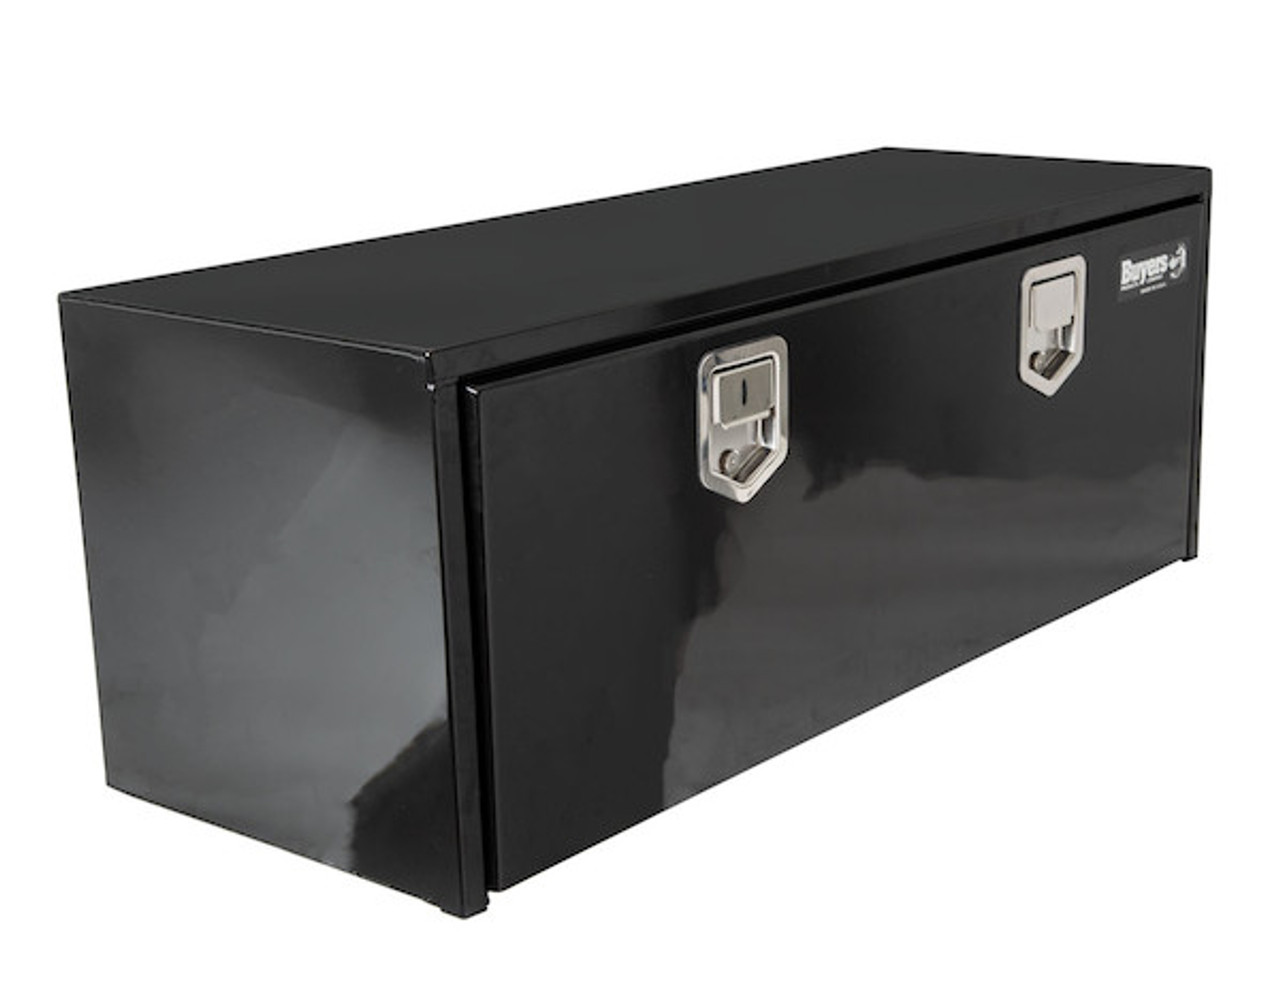 1702110 - 18x18x48 Inch Black Steel Underbody Truck Box With Paddle Latch